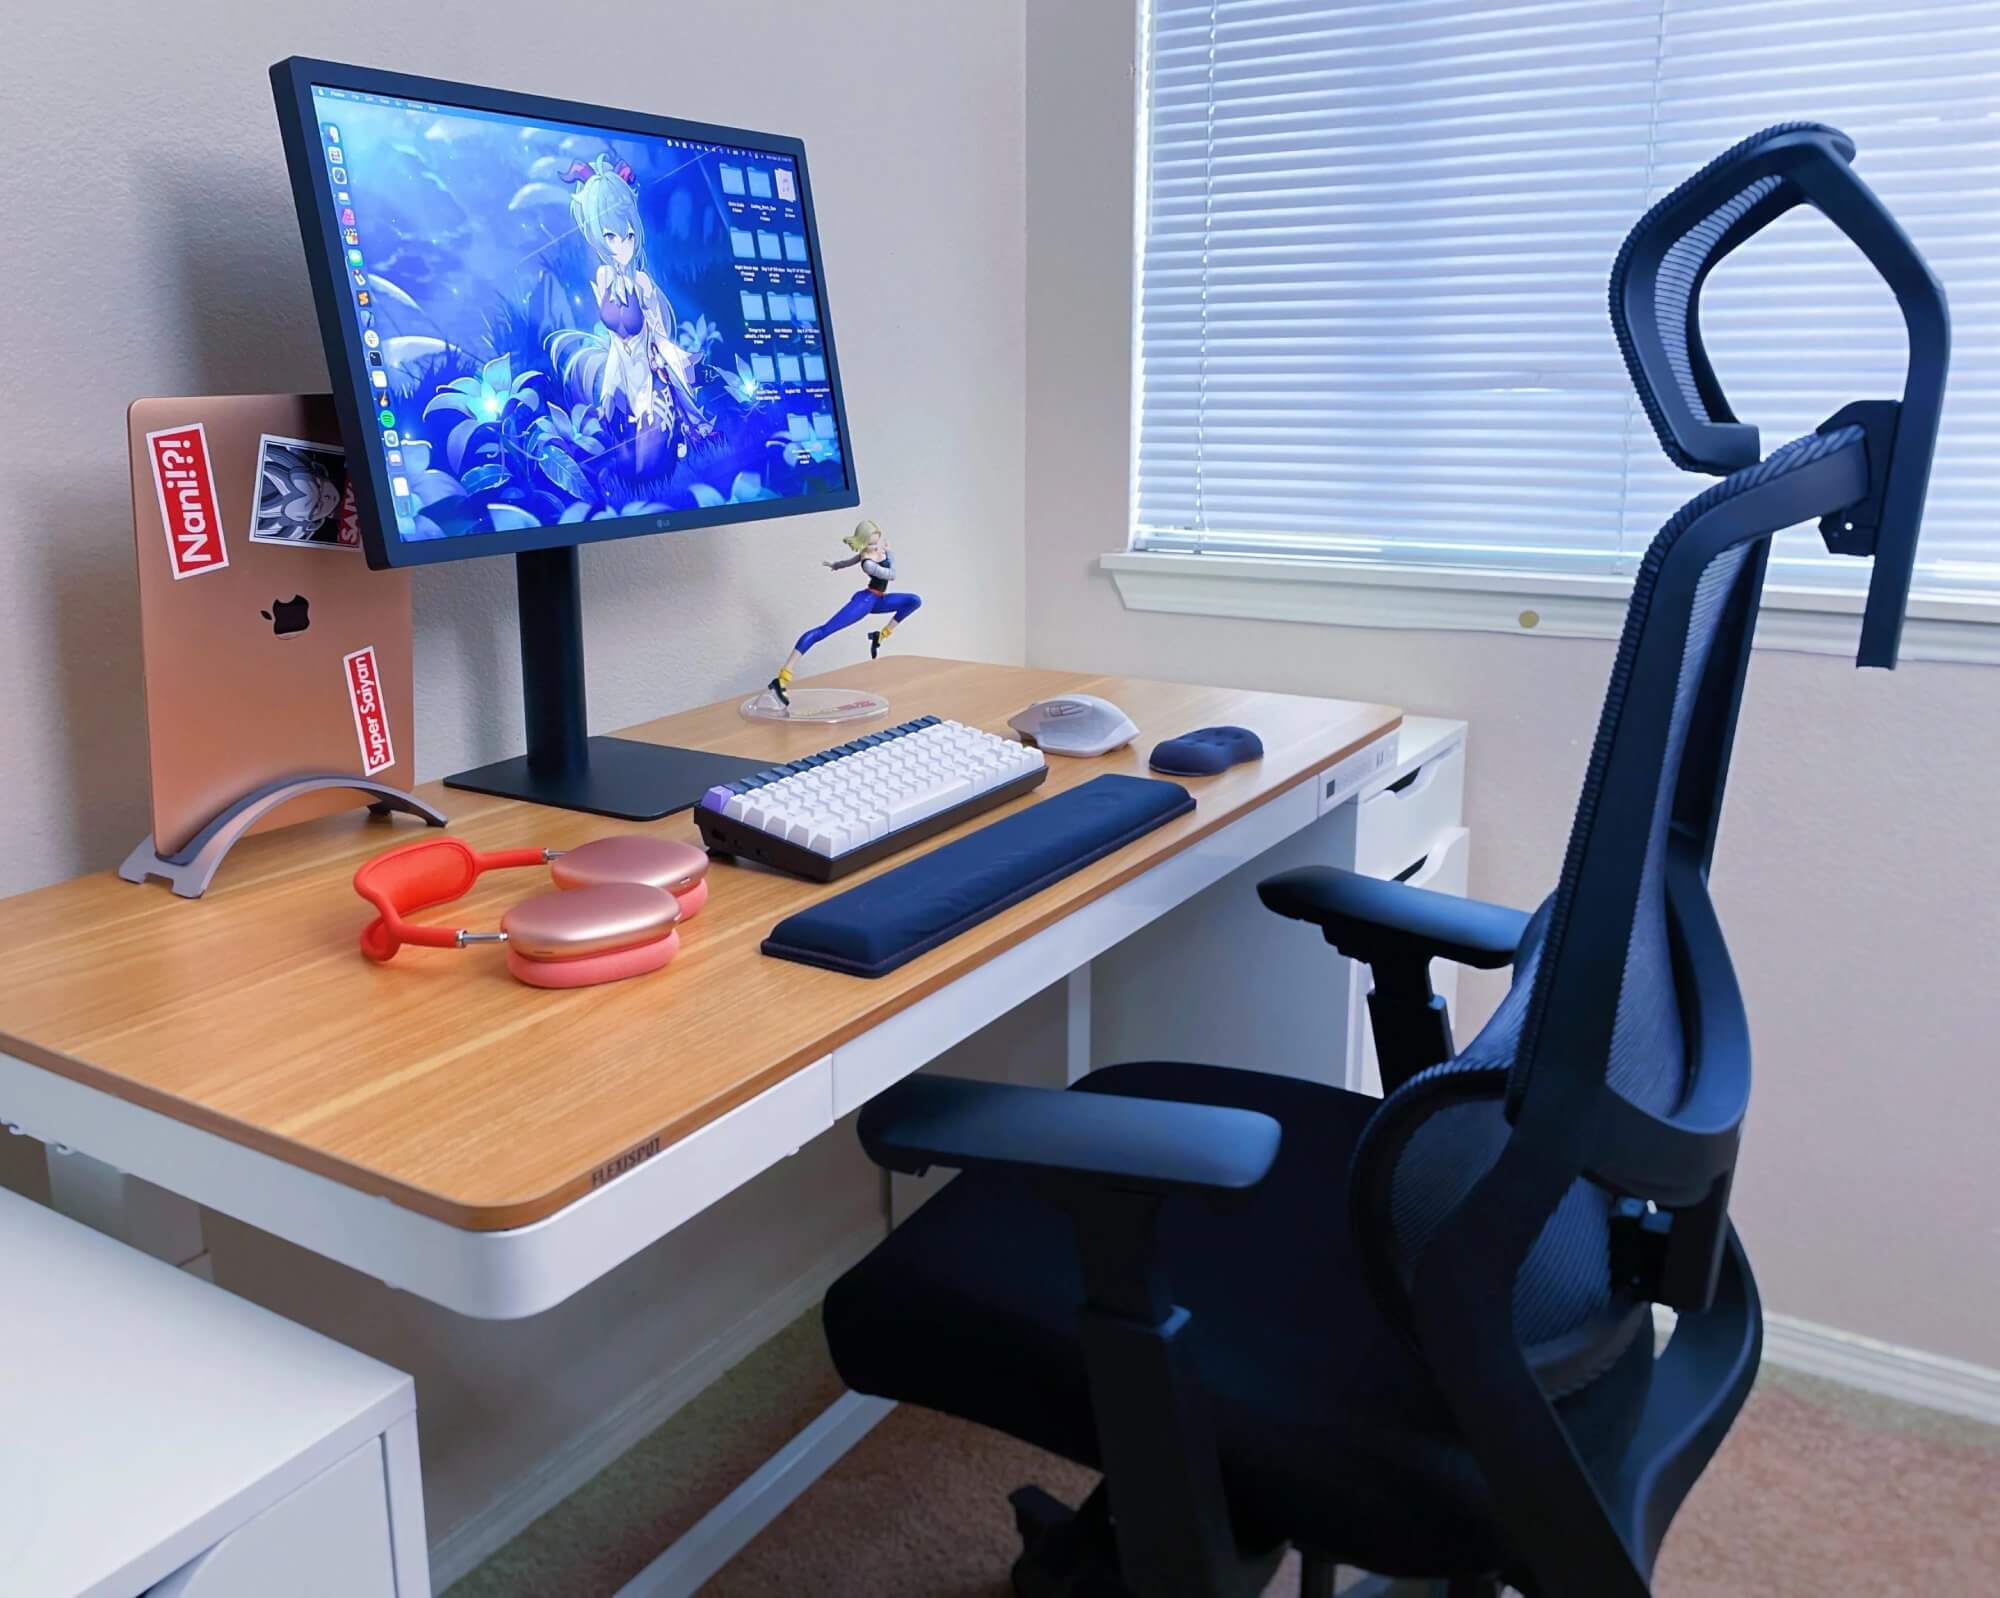 A small home office desk setup with a FlexiSpot standing desk